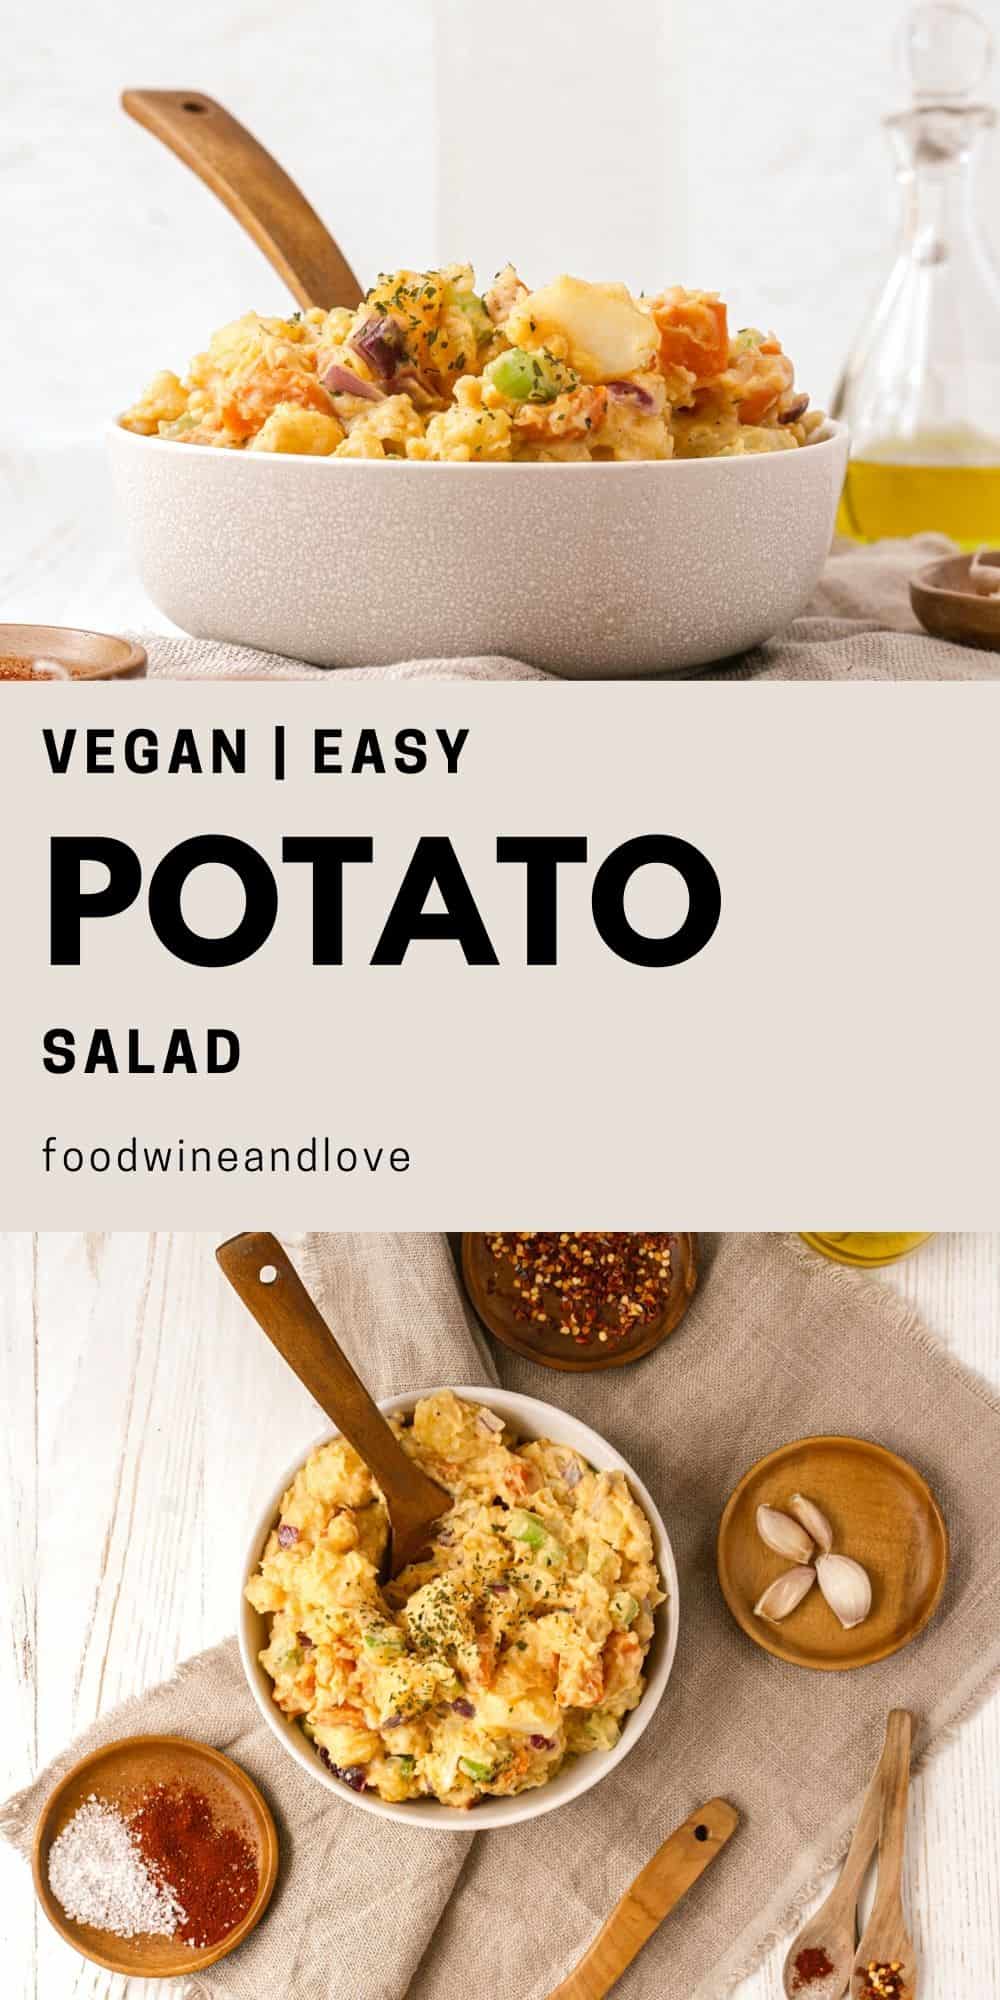 How to Make Vegan Potato Salad